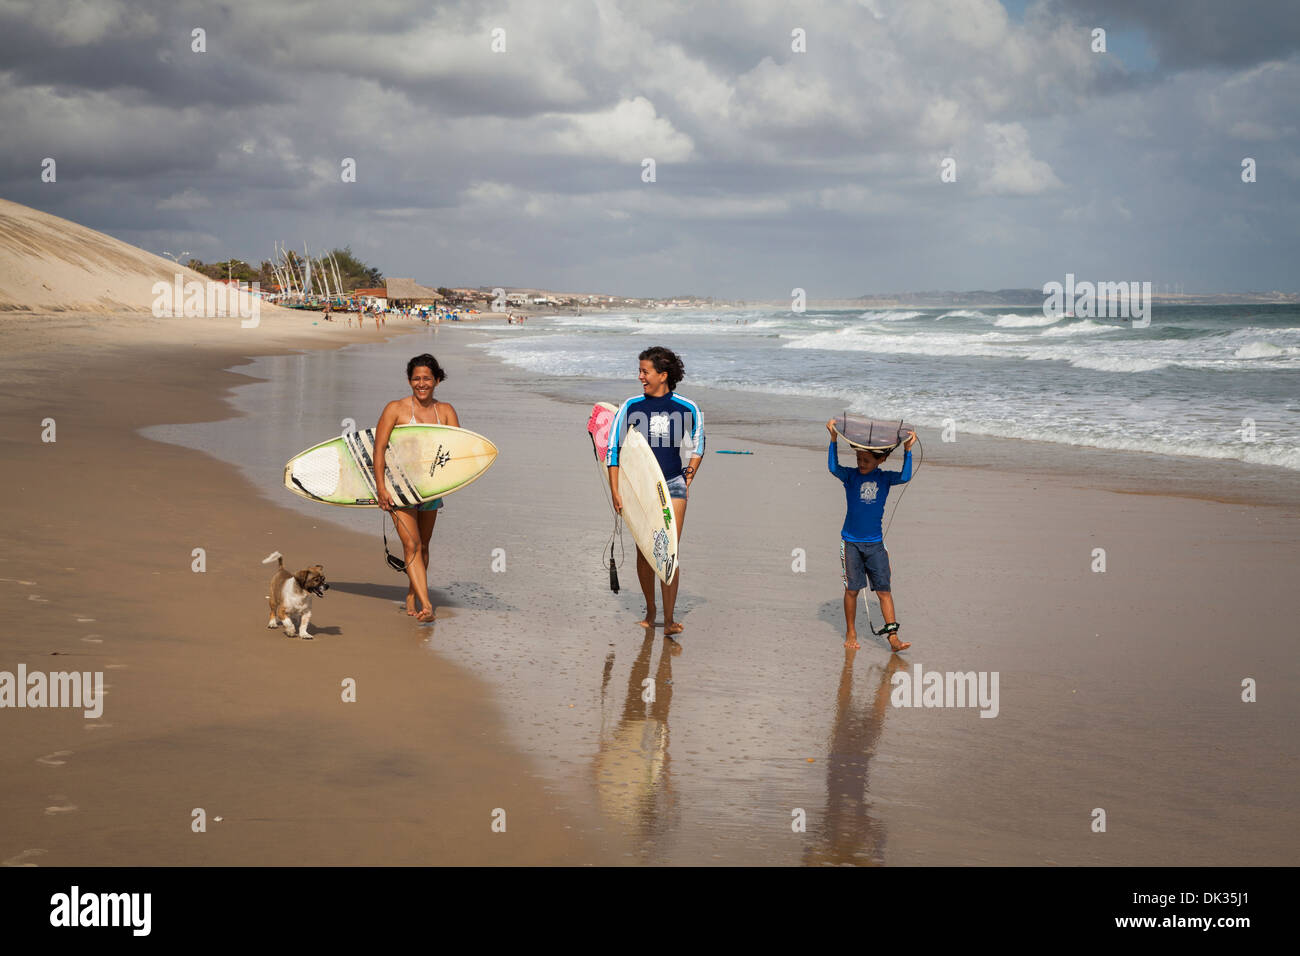 Surfers on the beach in Iguape, Fortaleza district, Brazil. Stock Photo